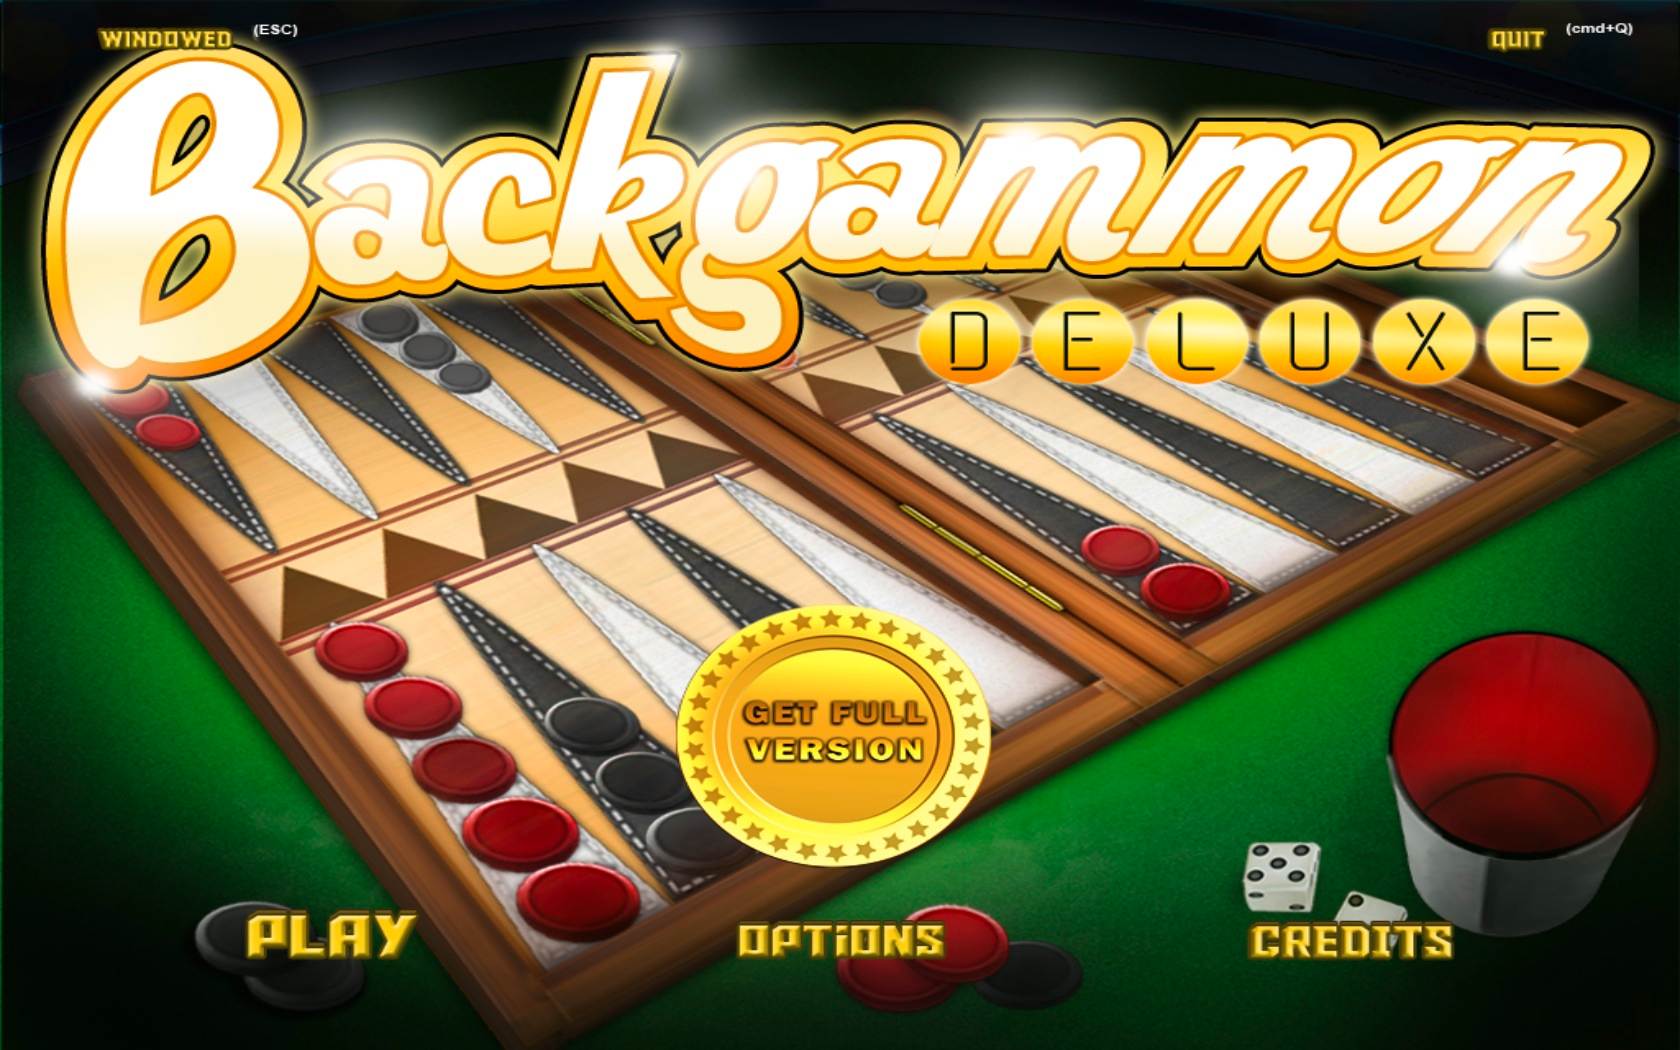 Backgammon Deluxe! : Main menu